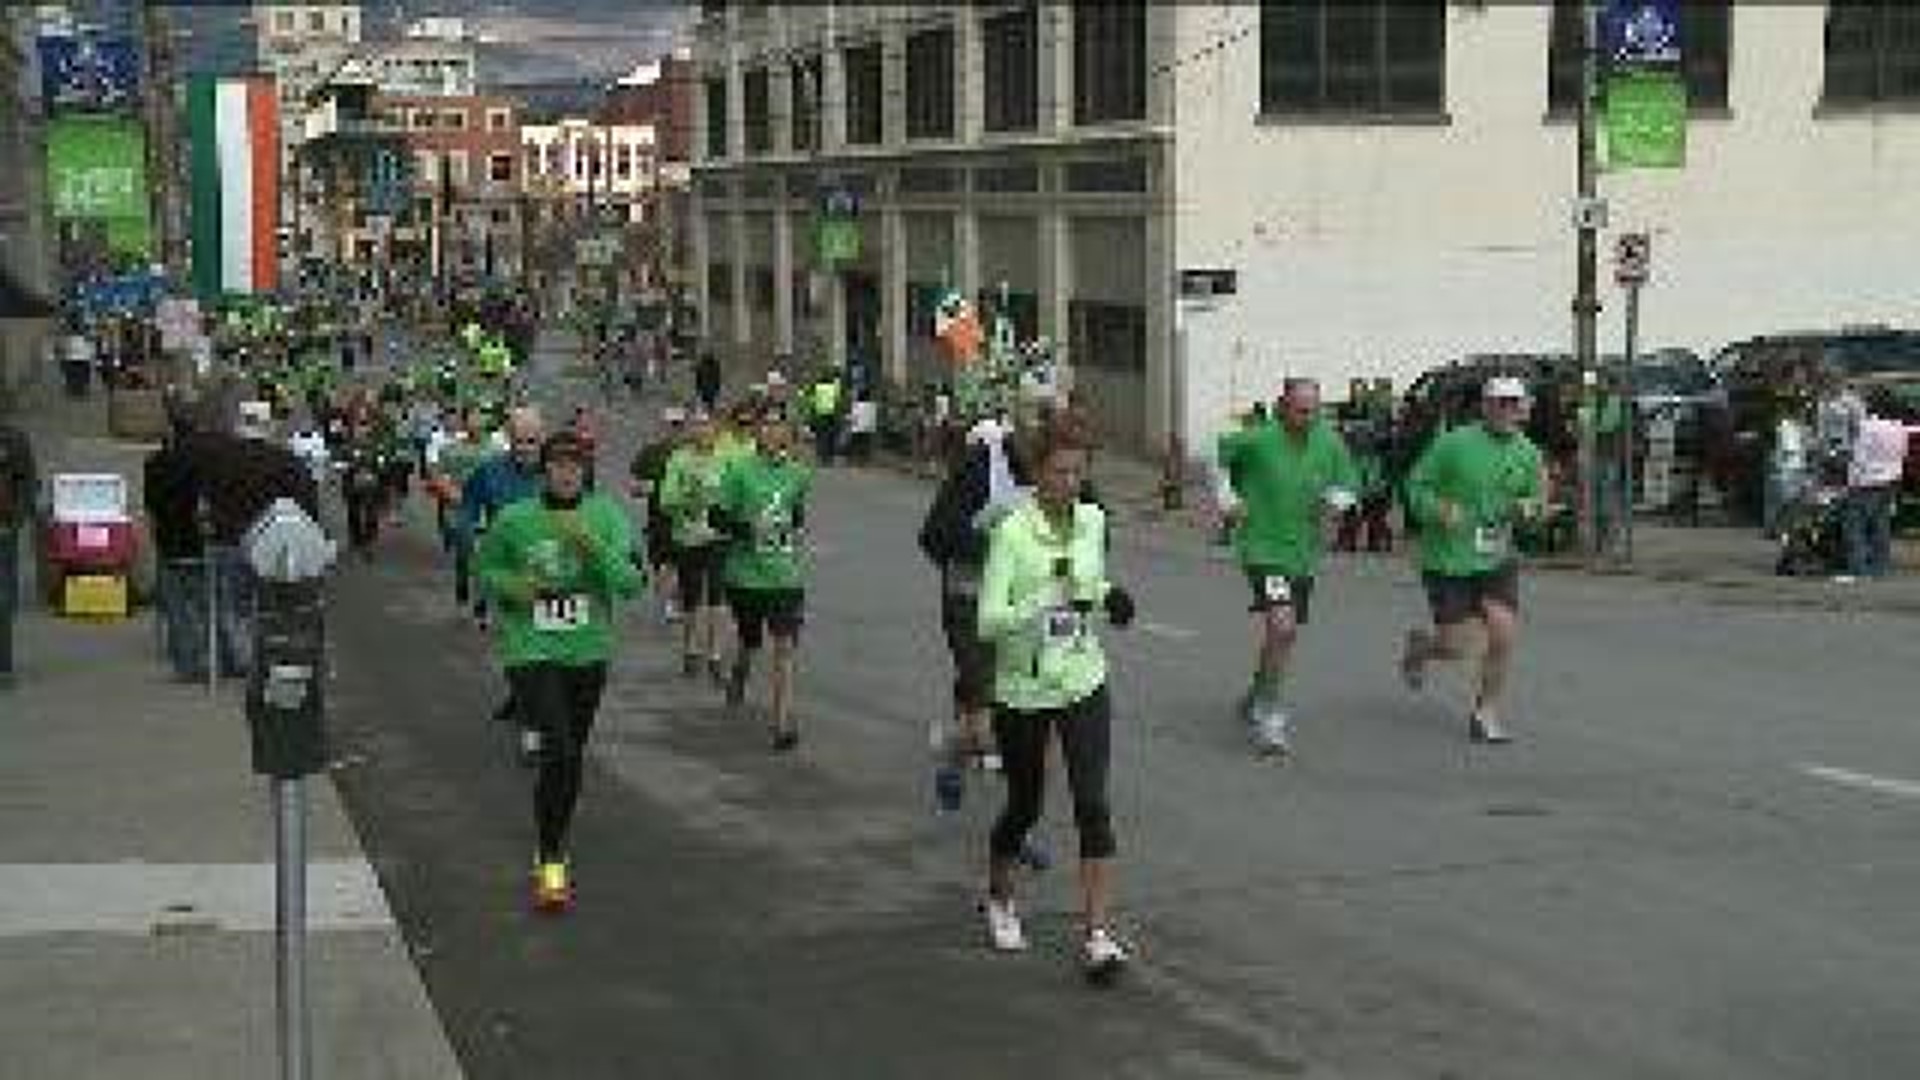 Annual Race Kicks off Parade Day in Scranton